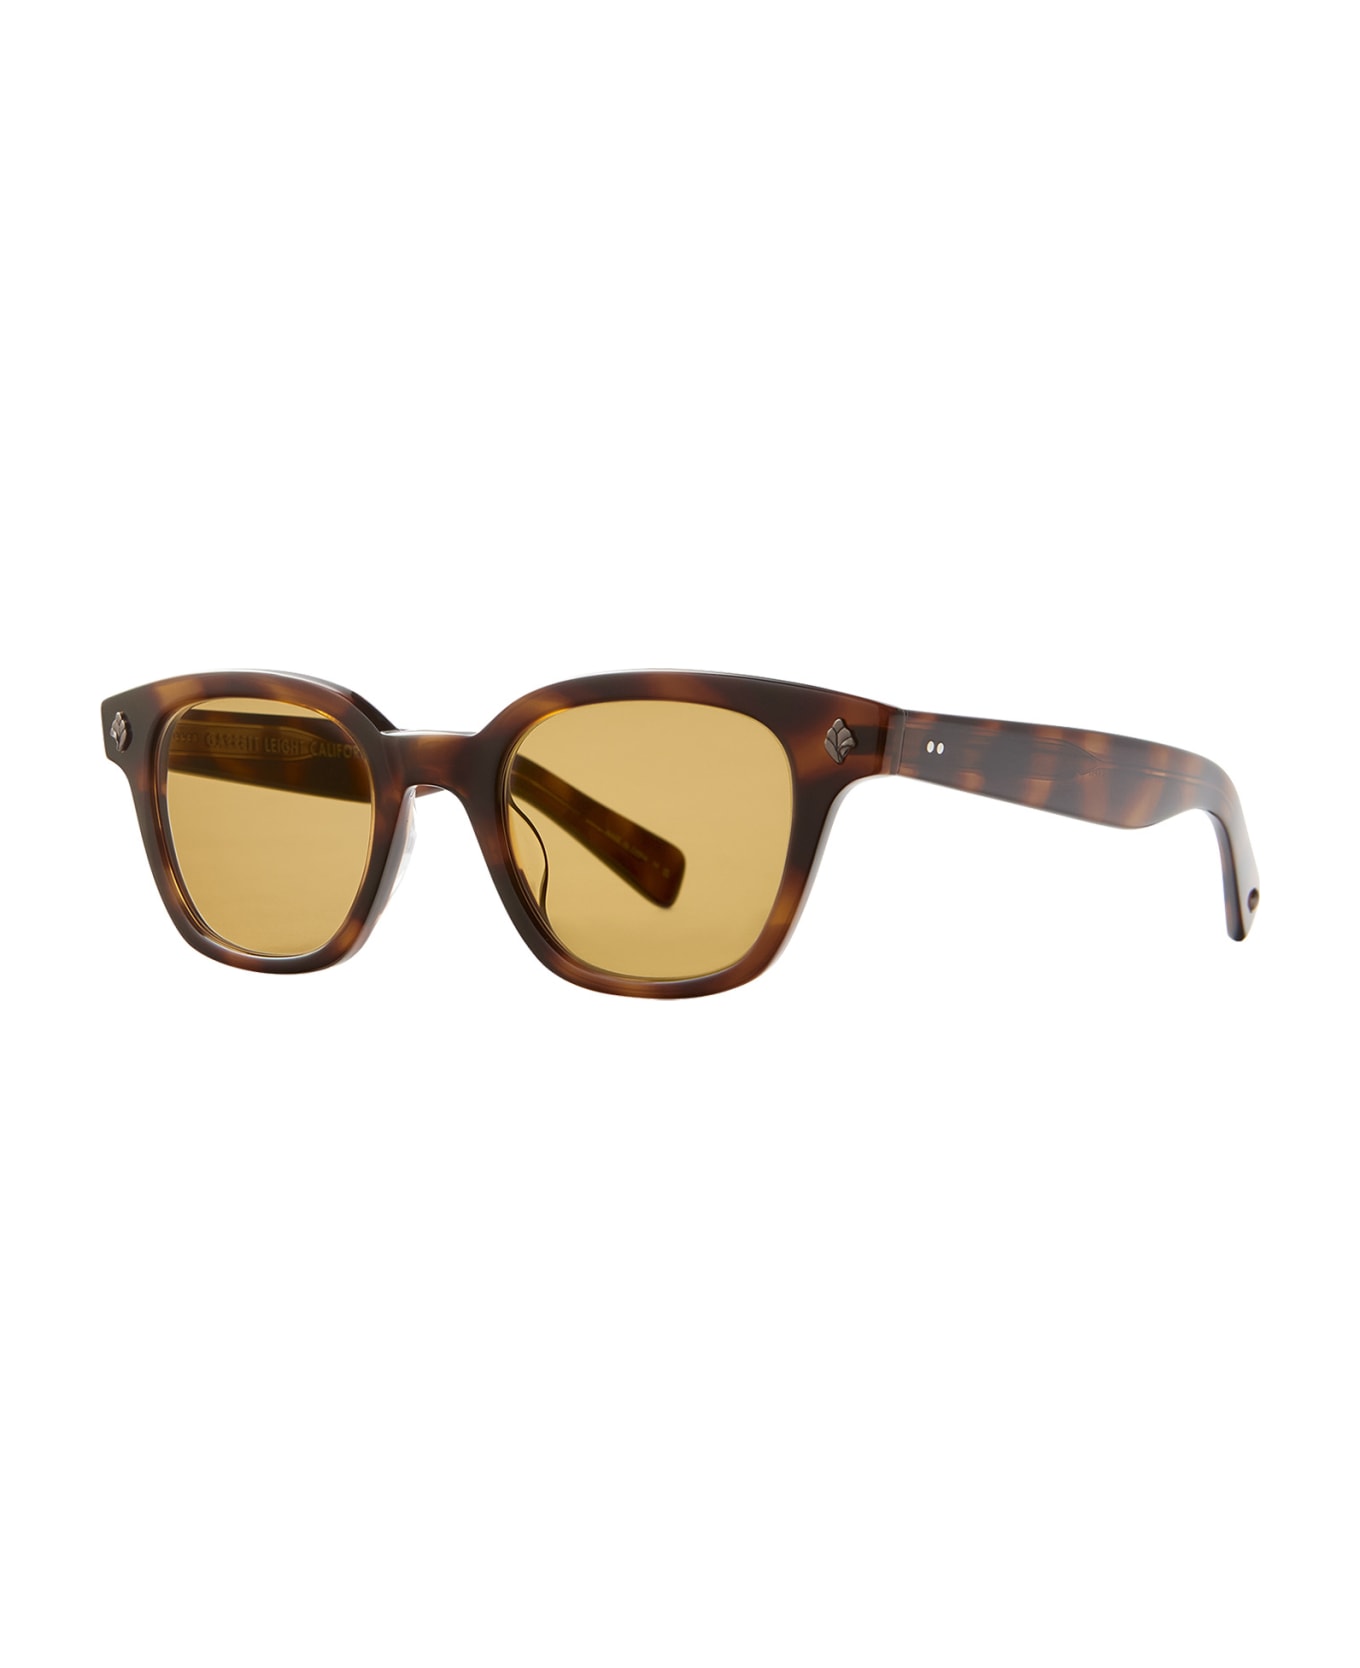 Garrett Leight Naples Sun Spotted Brown Shell Sunglasses - Spotted Brown Shell サングラス